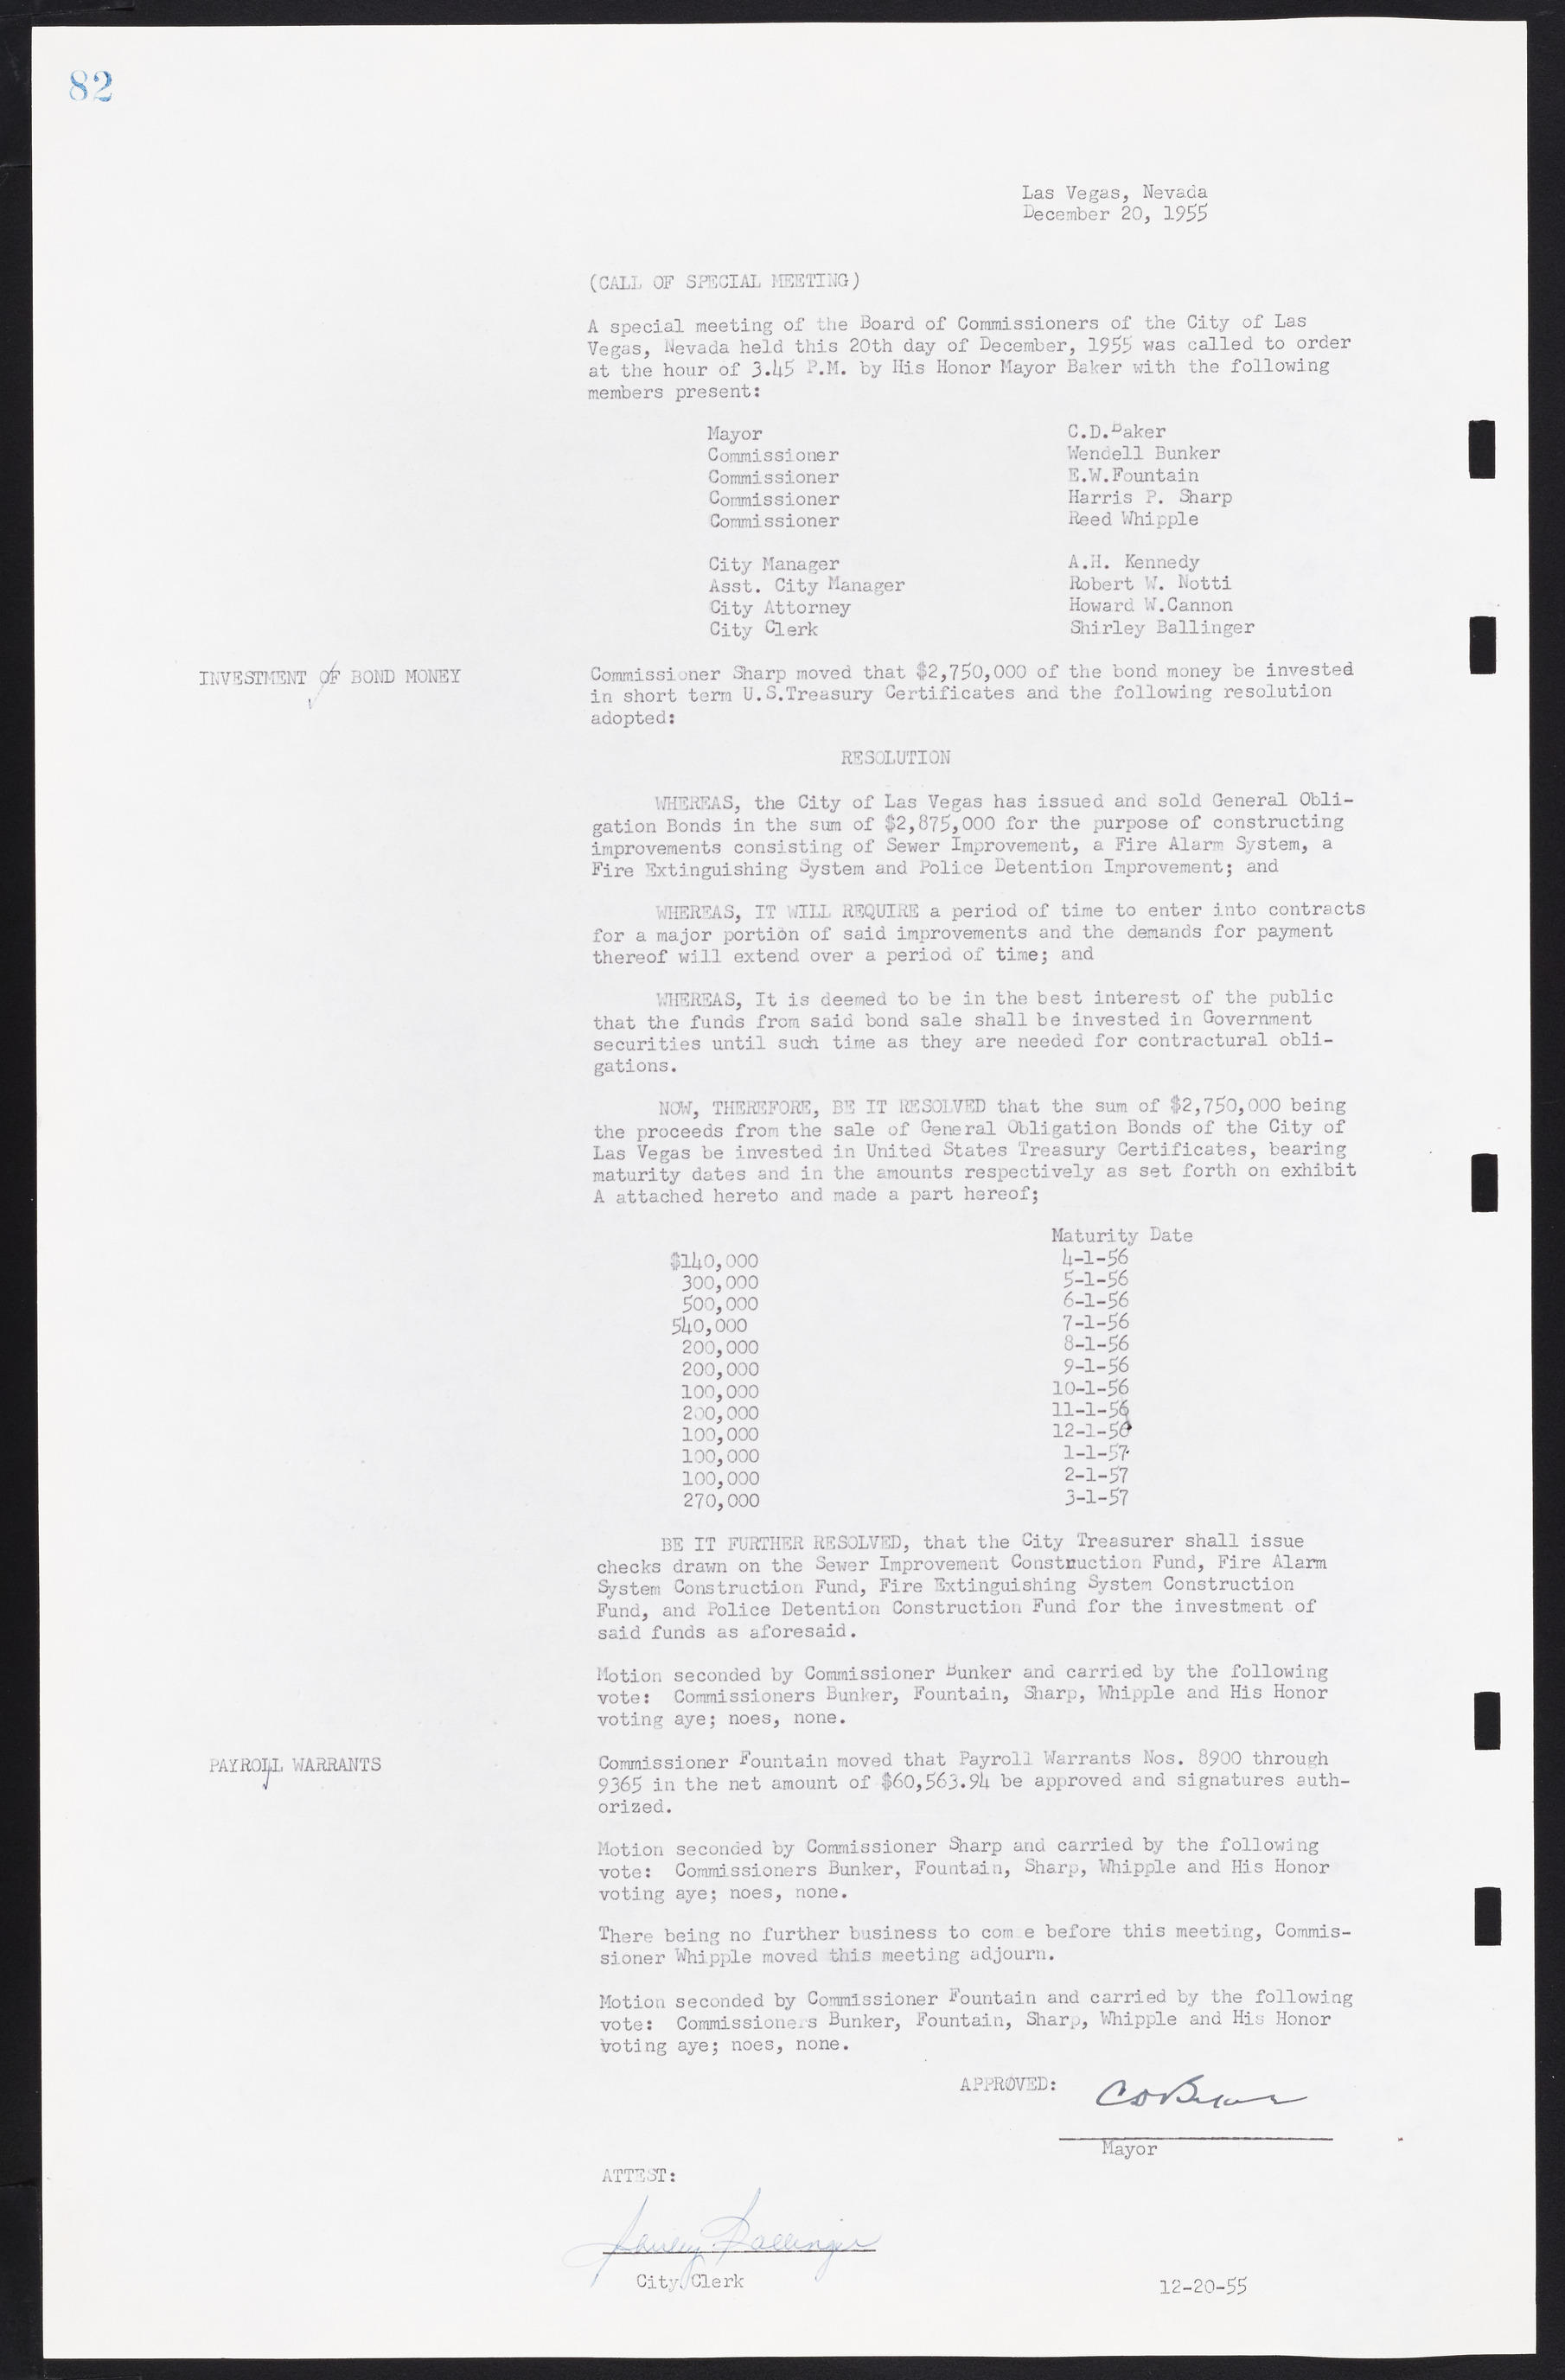 Las Vegas City Commission Minutes, September 21, 1955 to November 20, 1957, lvc000010-92